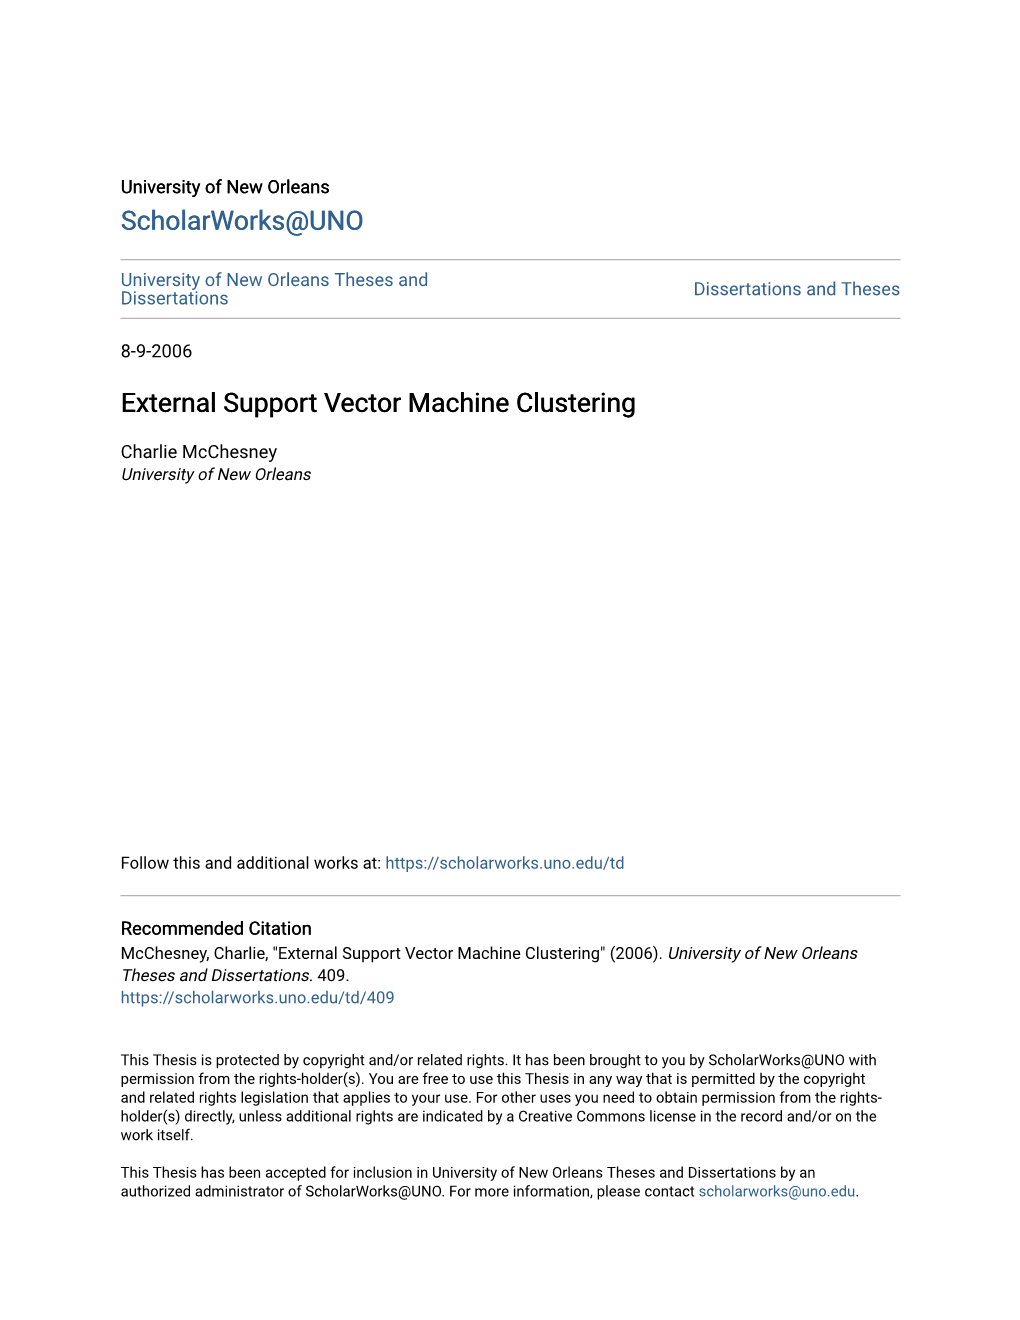 External Support Vector Machine Clustering